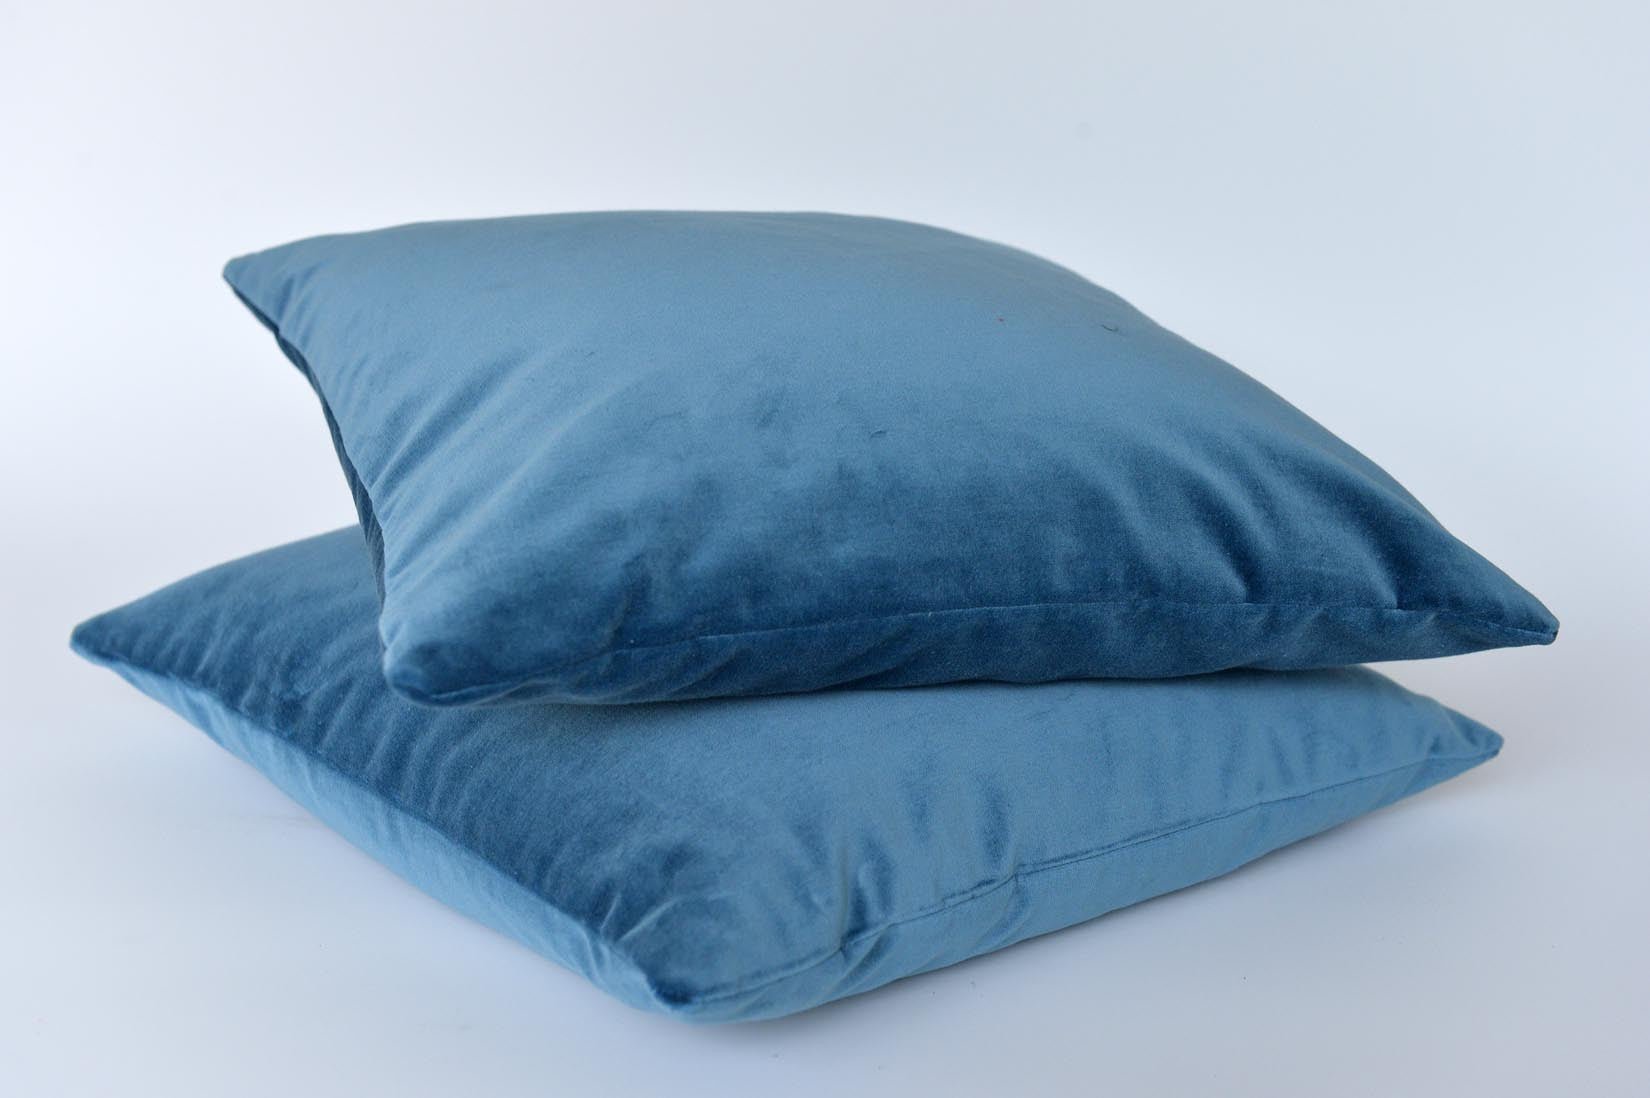 Square blue velvet cushion - Natalia Willmott